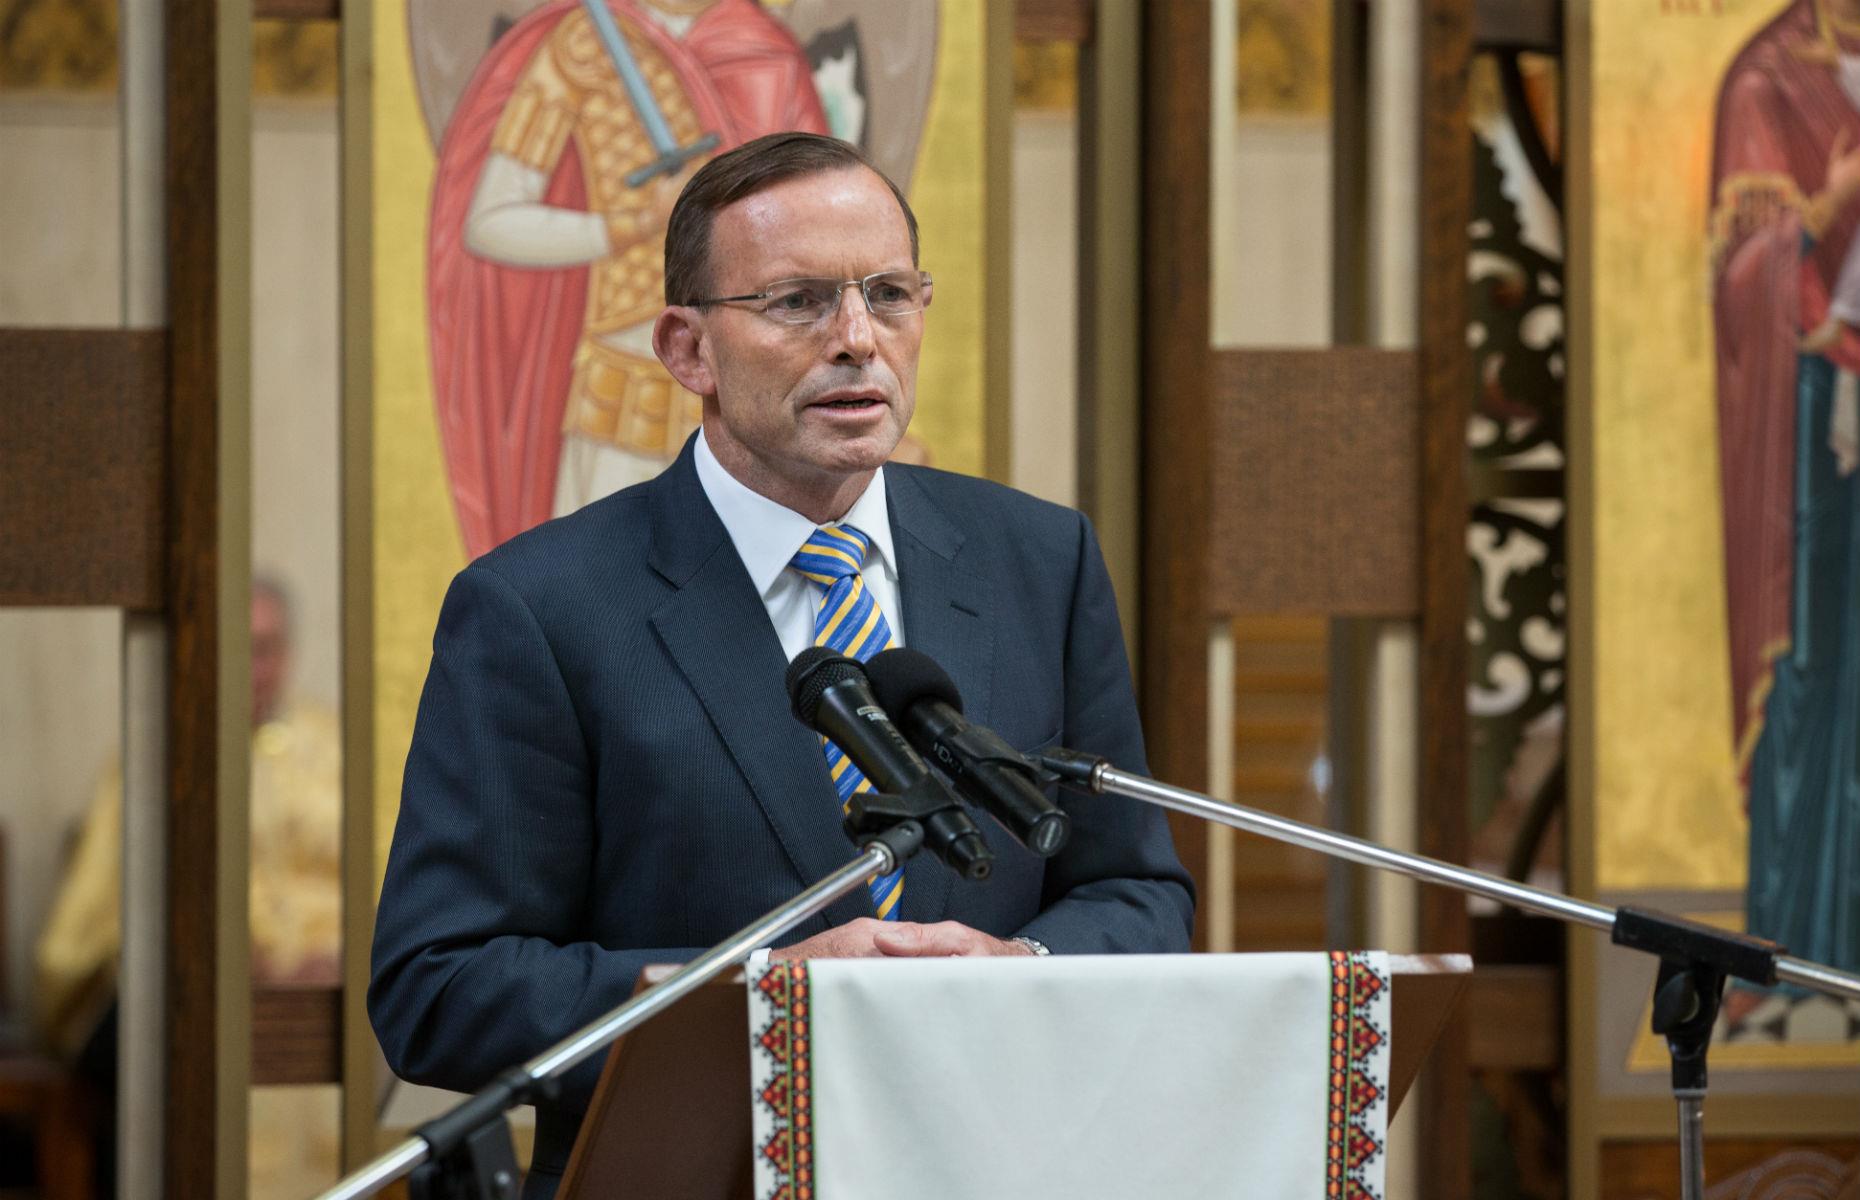 Tony Abbott, former Australian prime minister: A trainee priest 